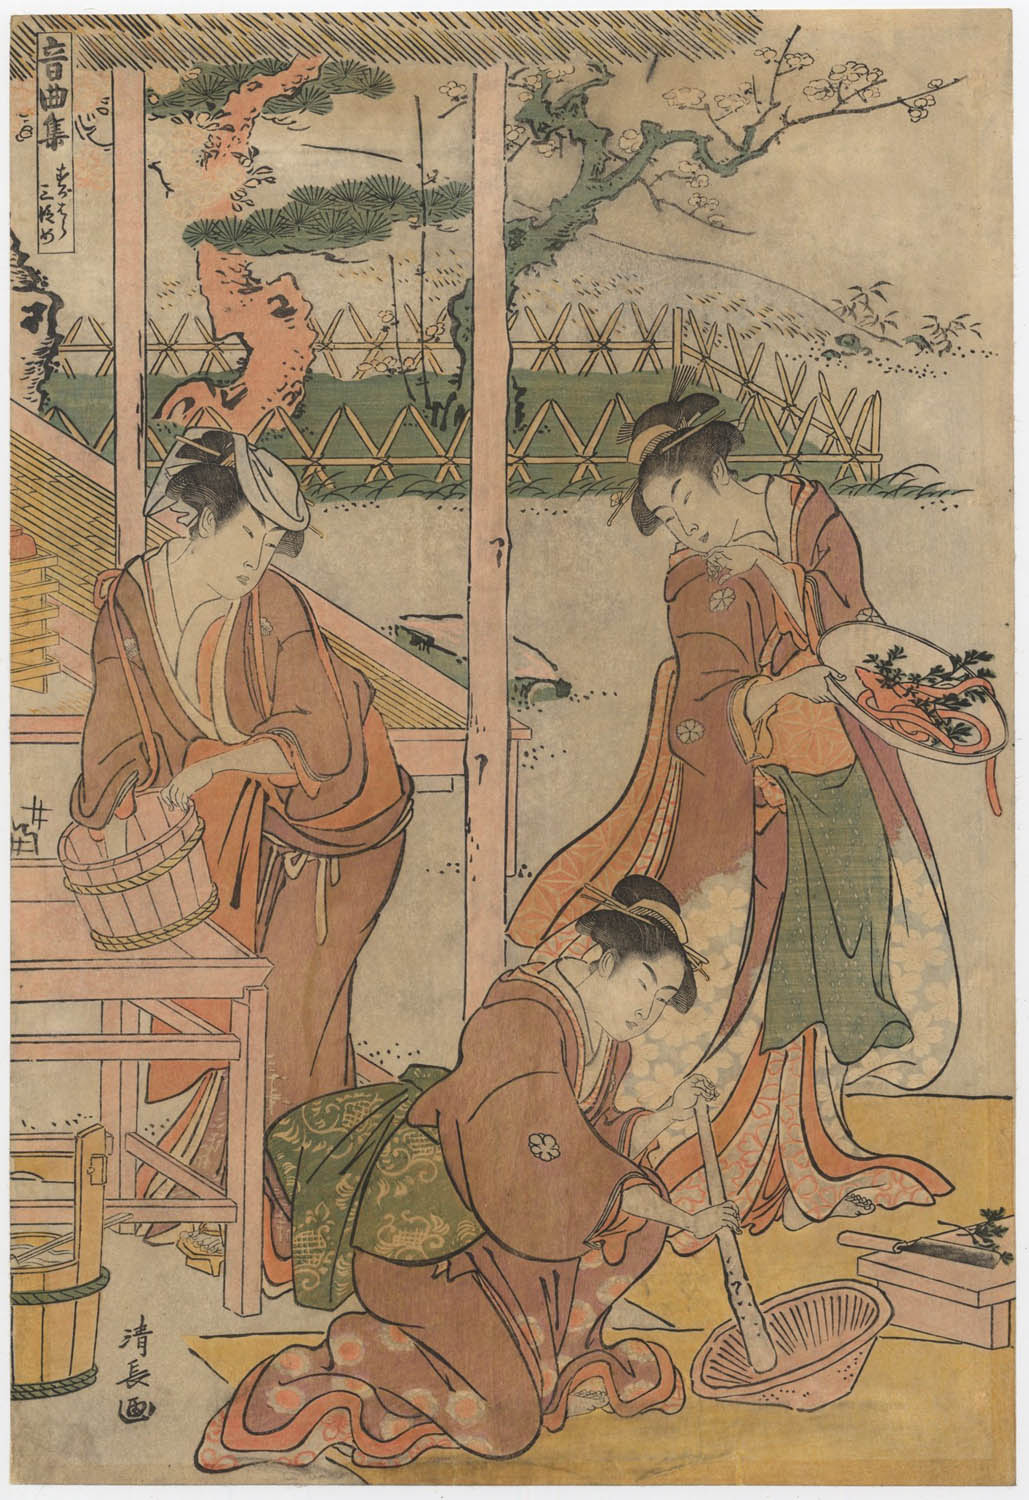 KIYONAGA (1752-1815). Three women. (Sold)